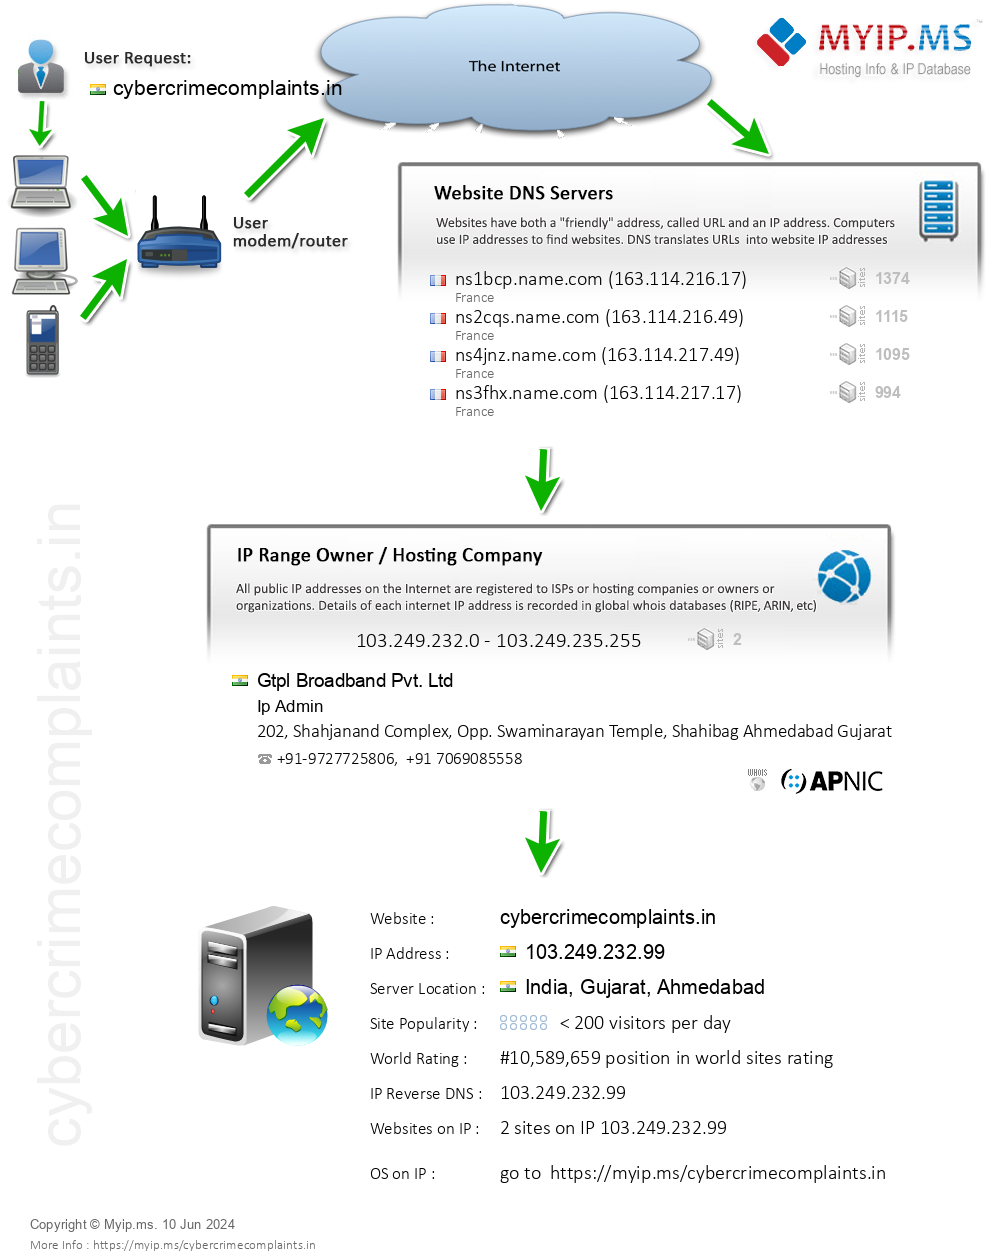 Cybercrimecomplaints.in - Website Hosting Visual IP Diagram